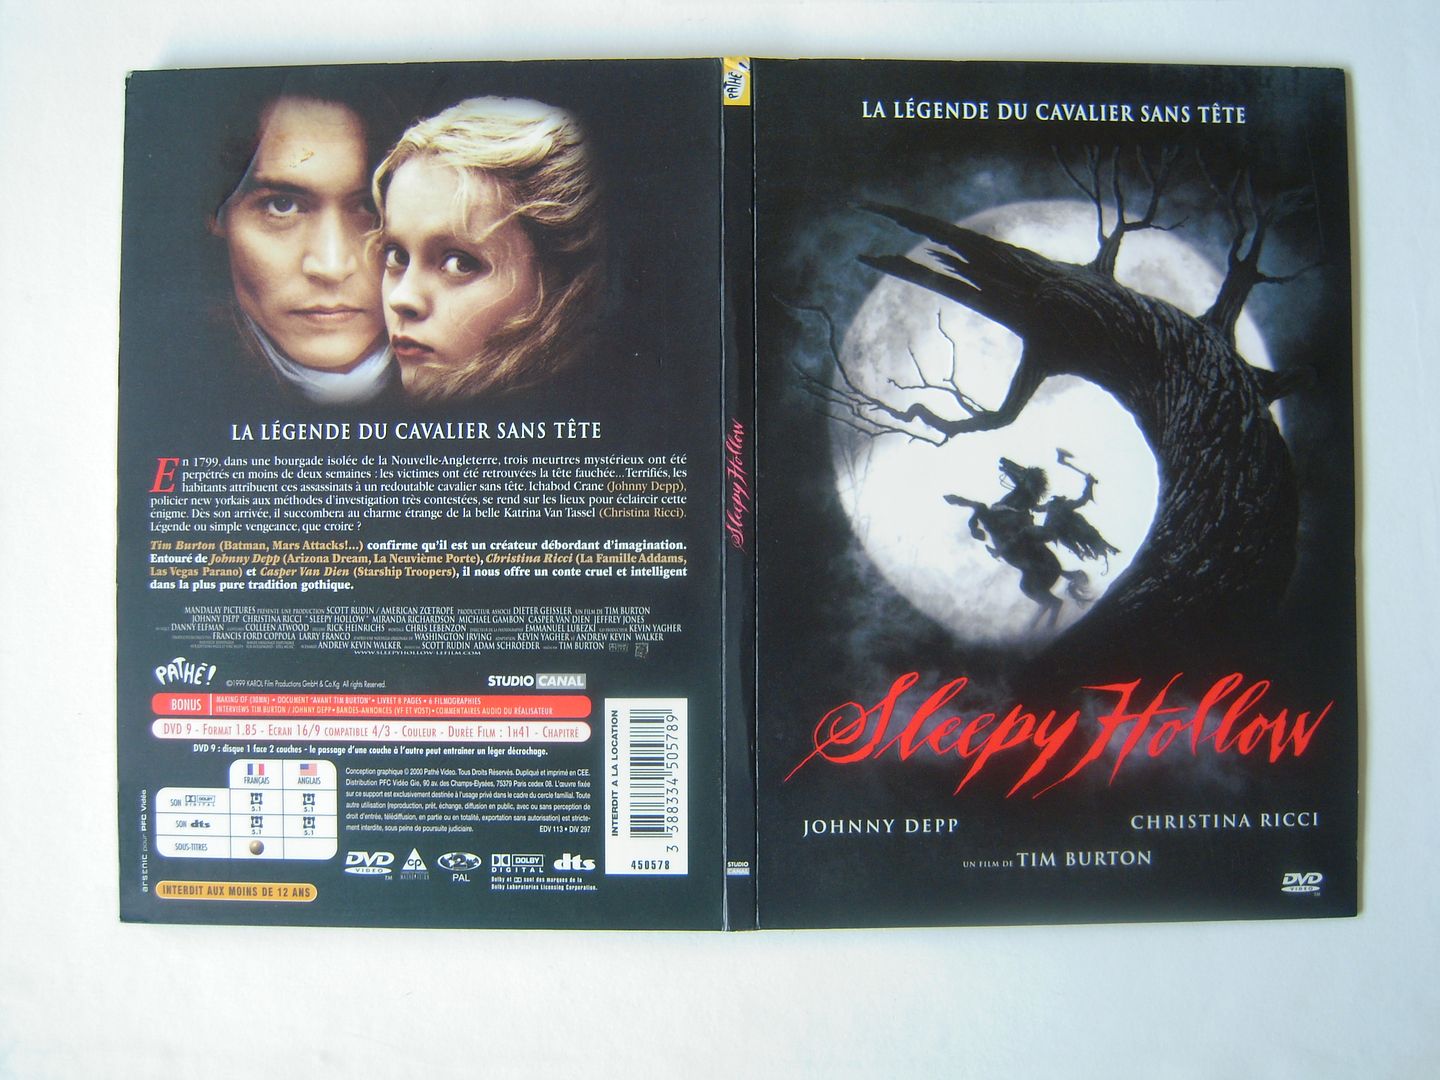 Sleepy Hollow - DVD/Bluray DSCN2301